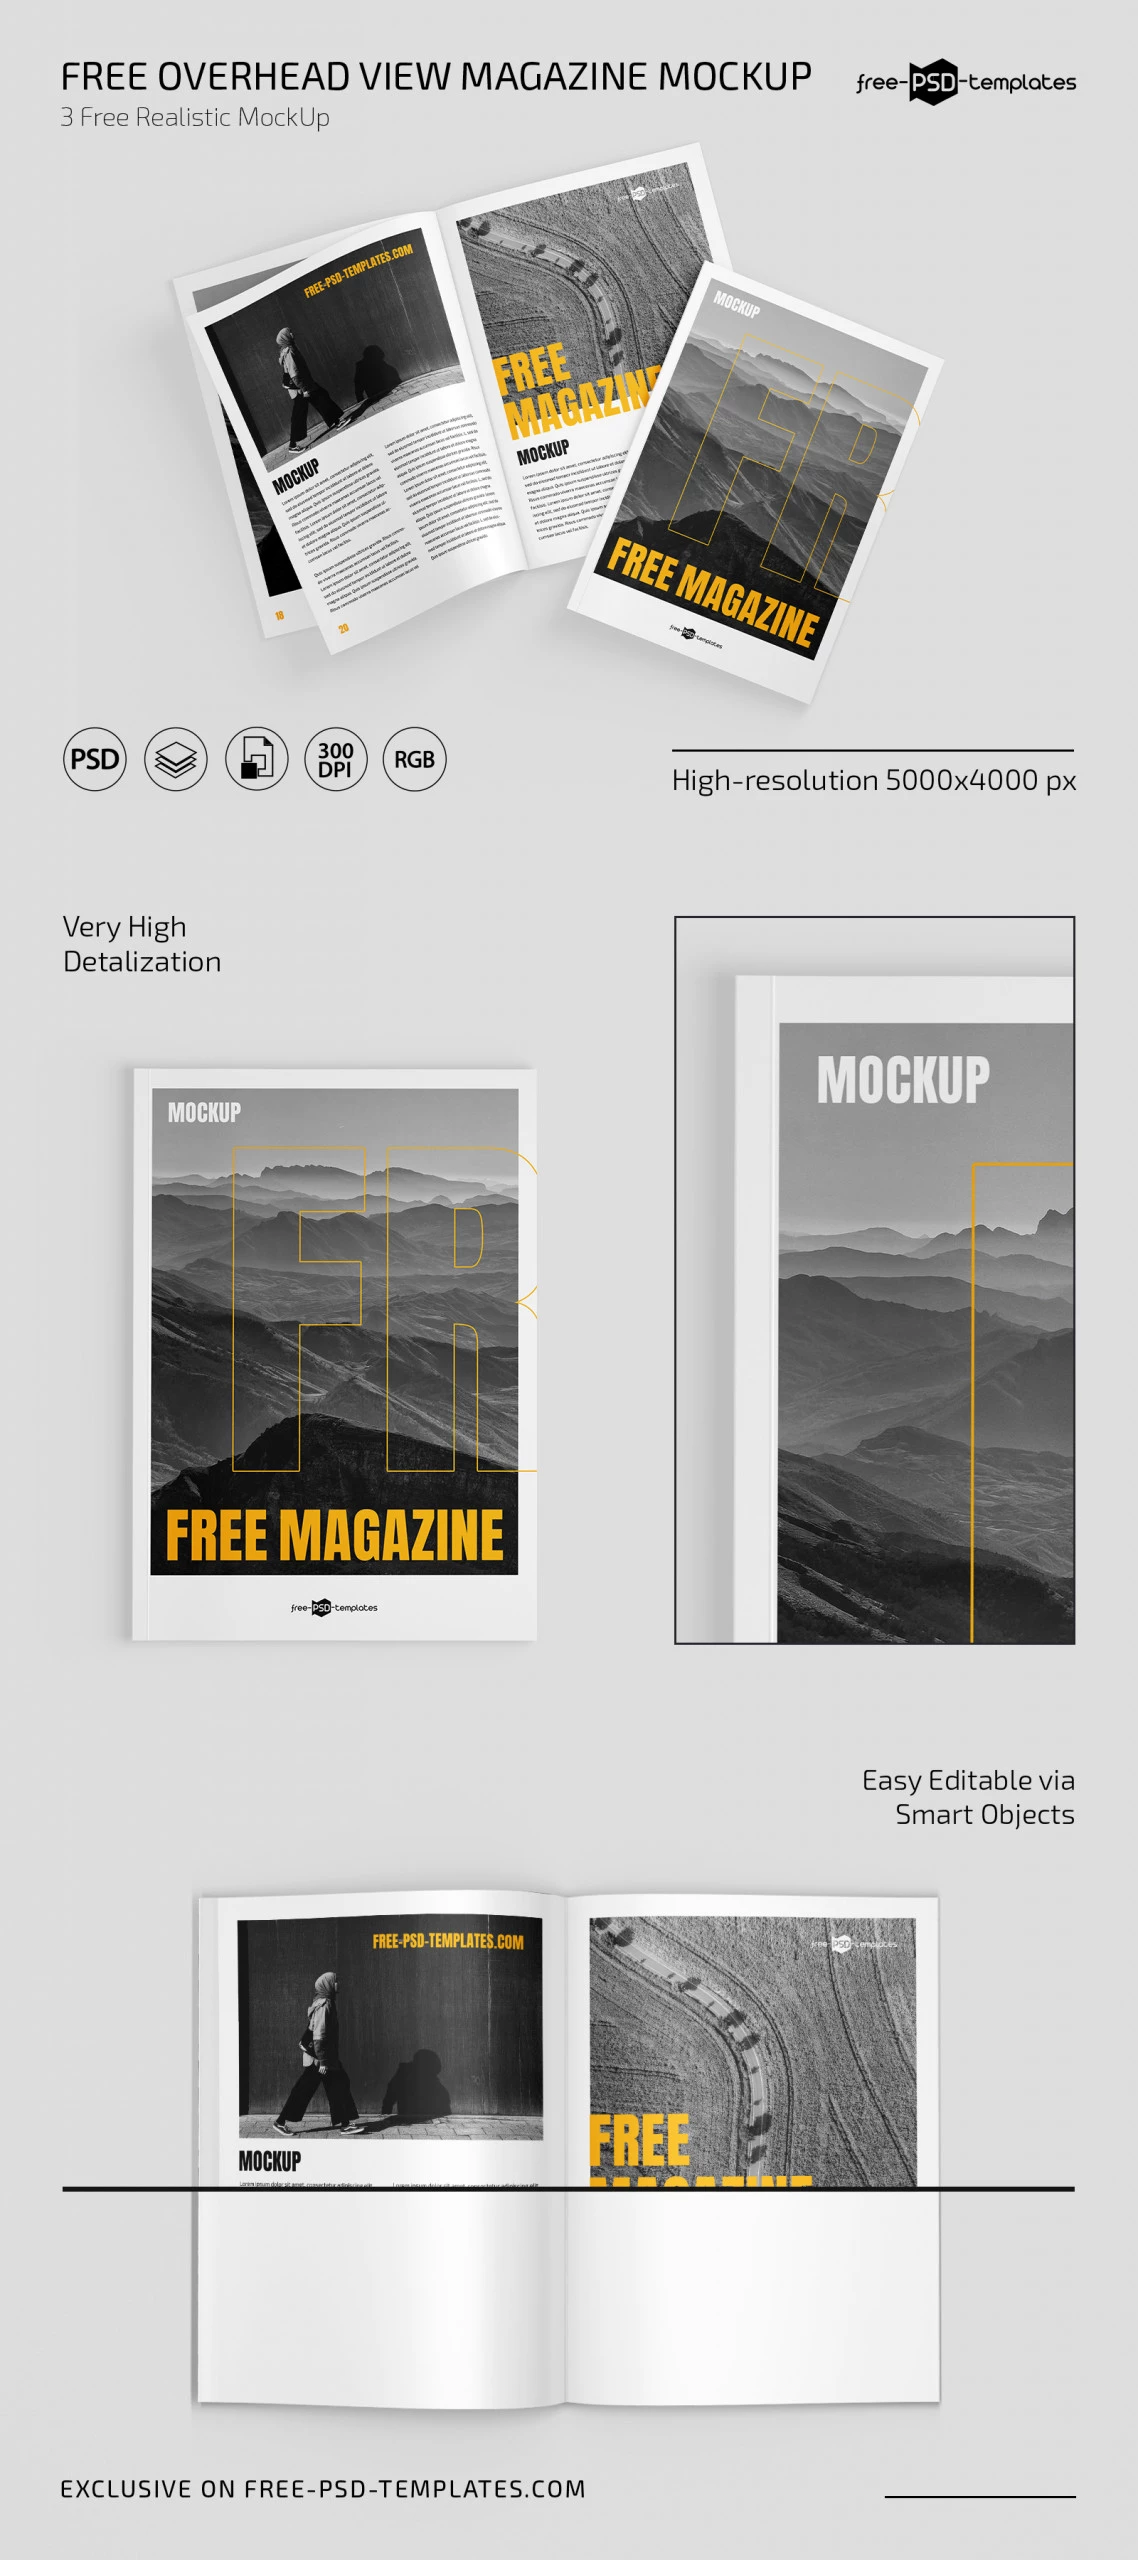 Free Overhead View Magazine Mockup